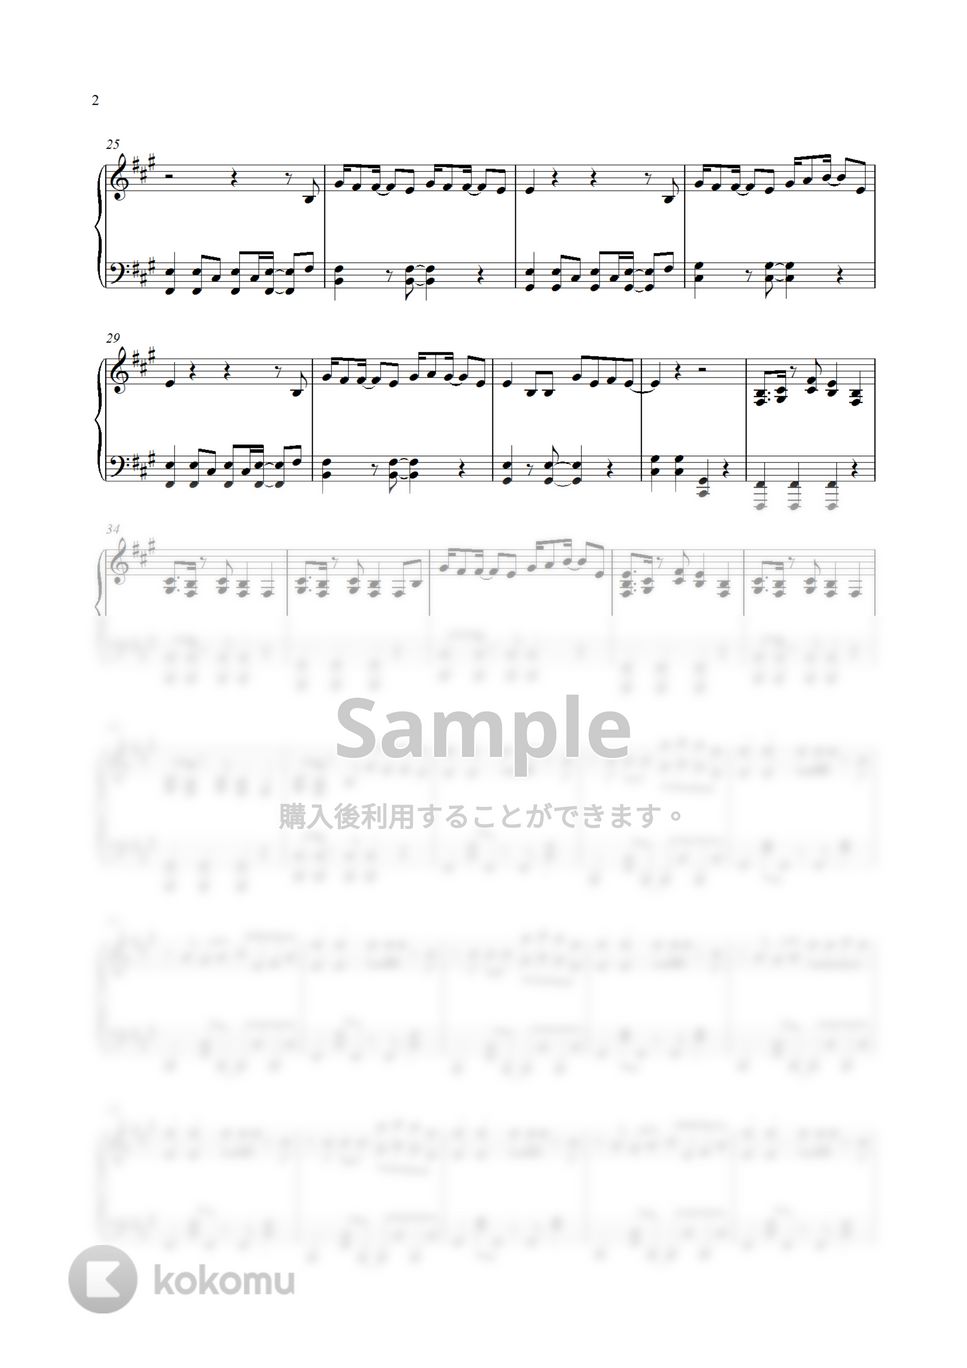 Eve - お気に召すまま (Piano Version) by GoGoPiano